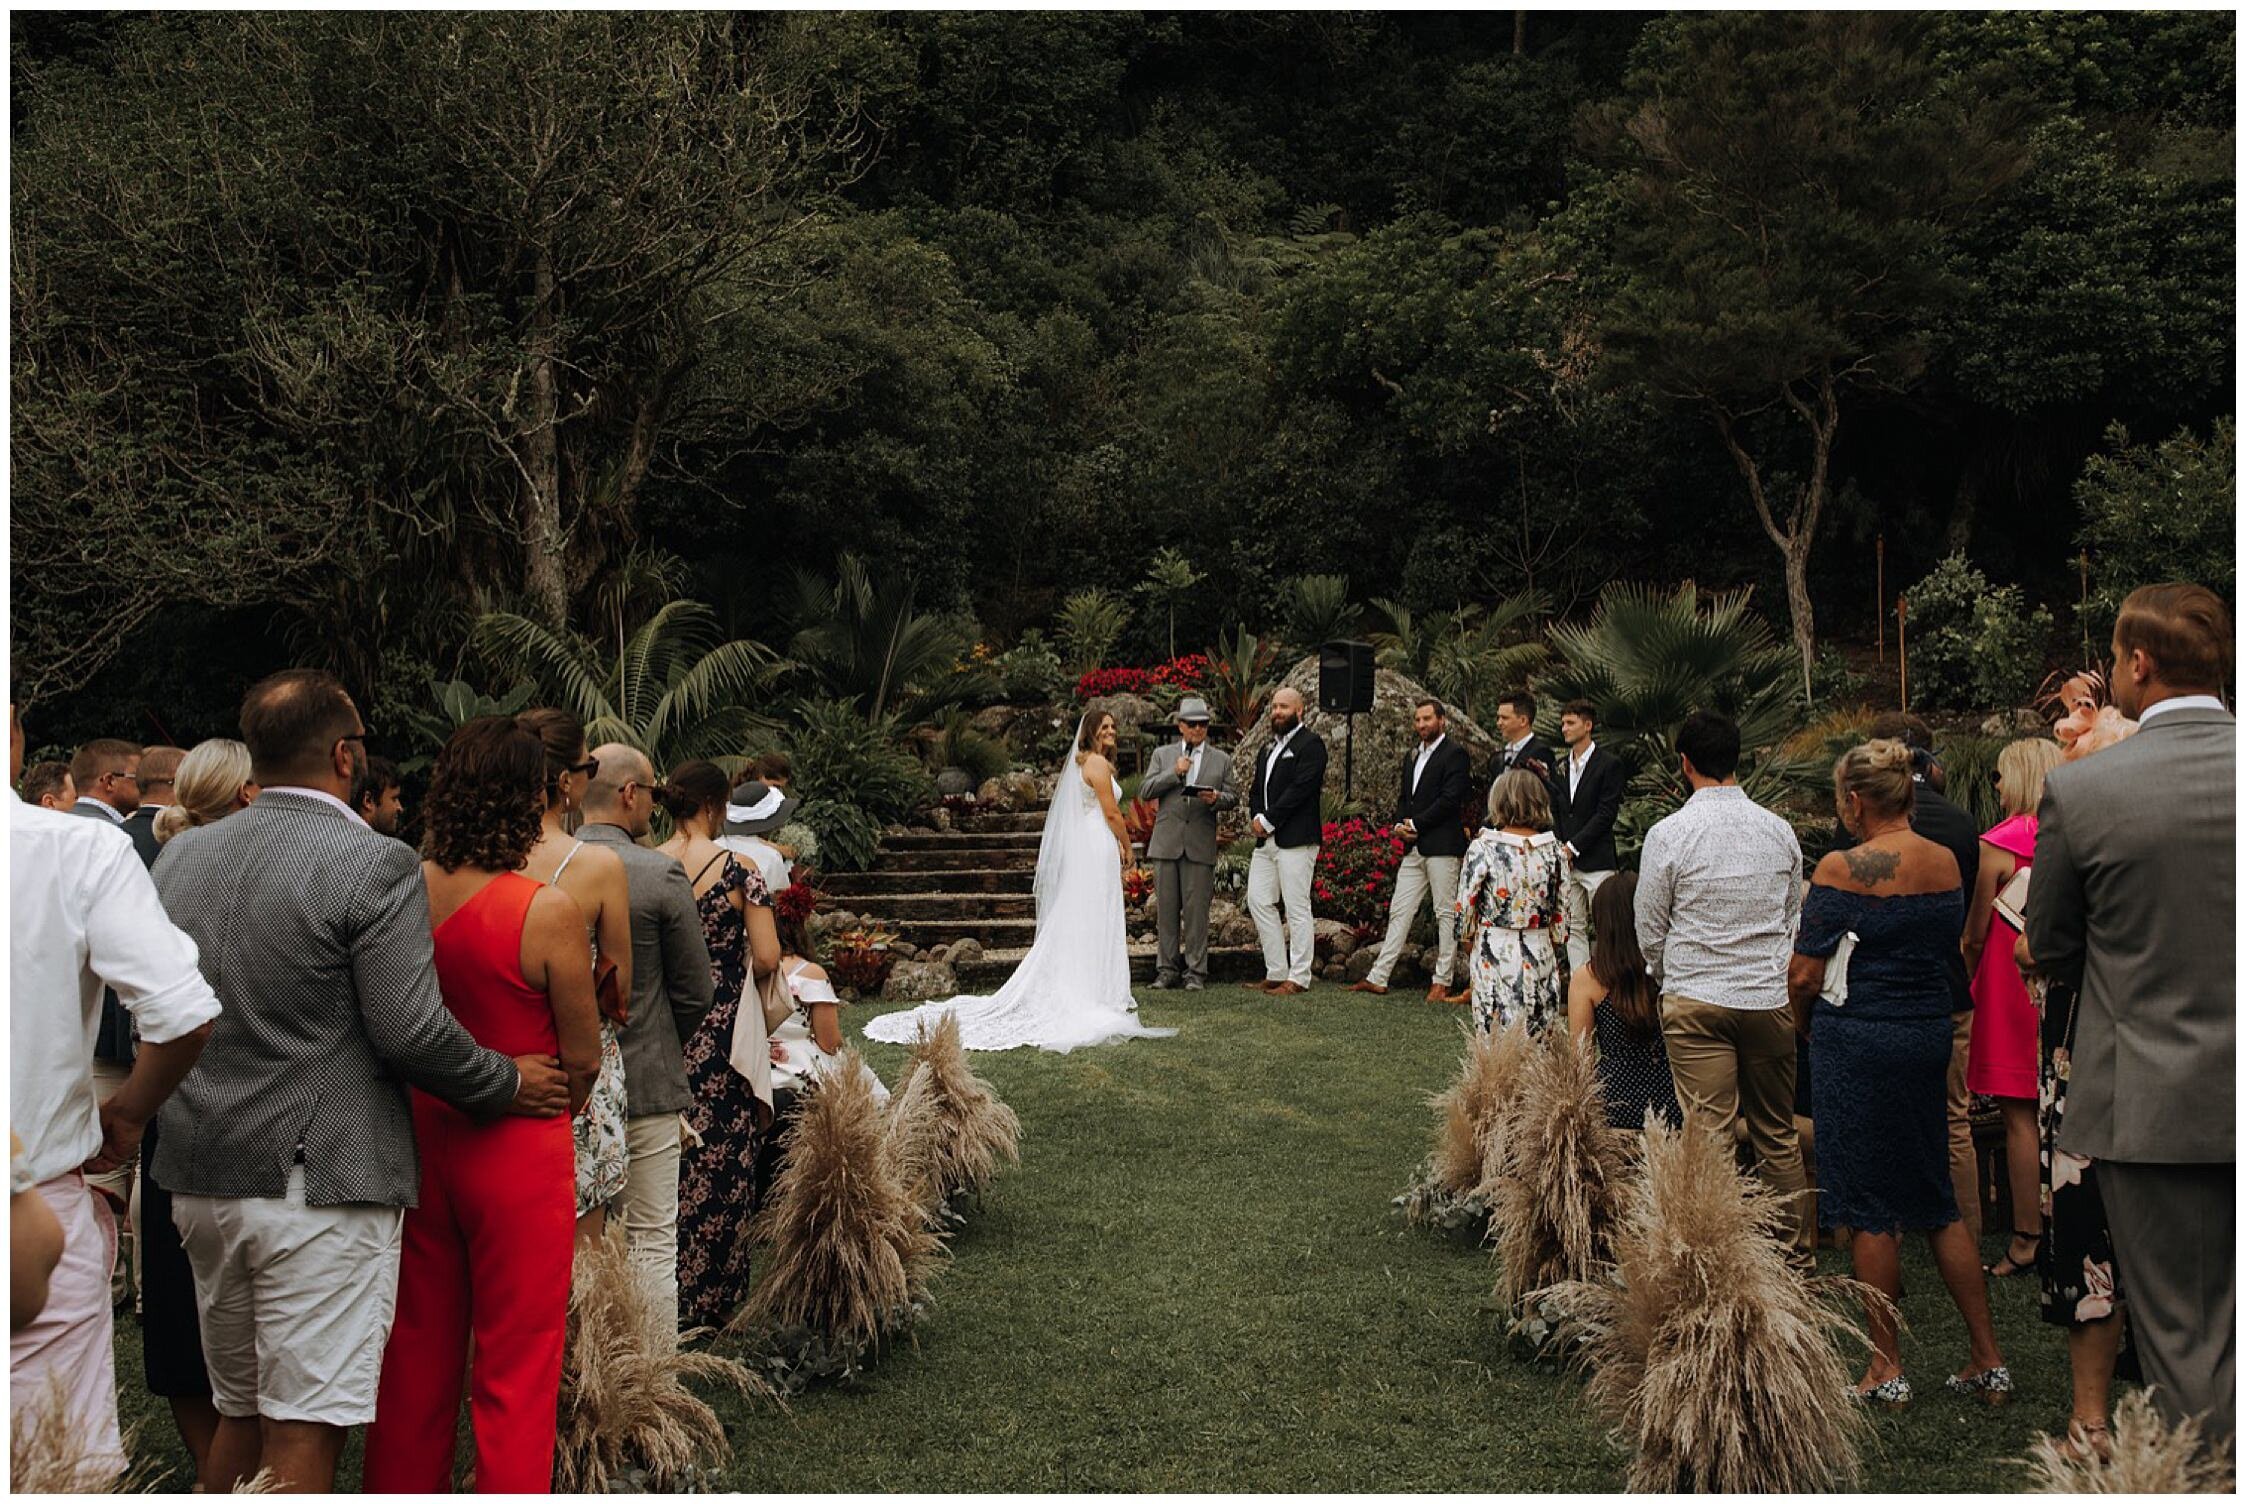 Zanda+Auckland+wedding+photographer+dramatic+Whangarei+heads+vintage+touches+New+Zealand_32.jpeg